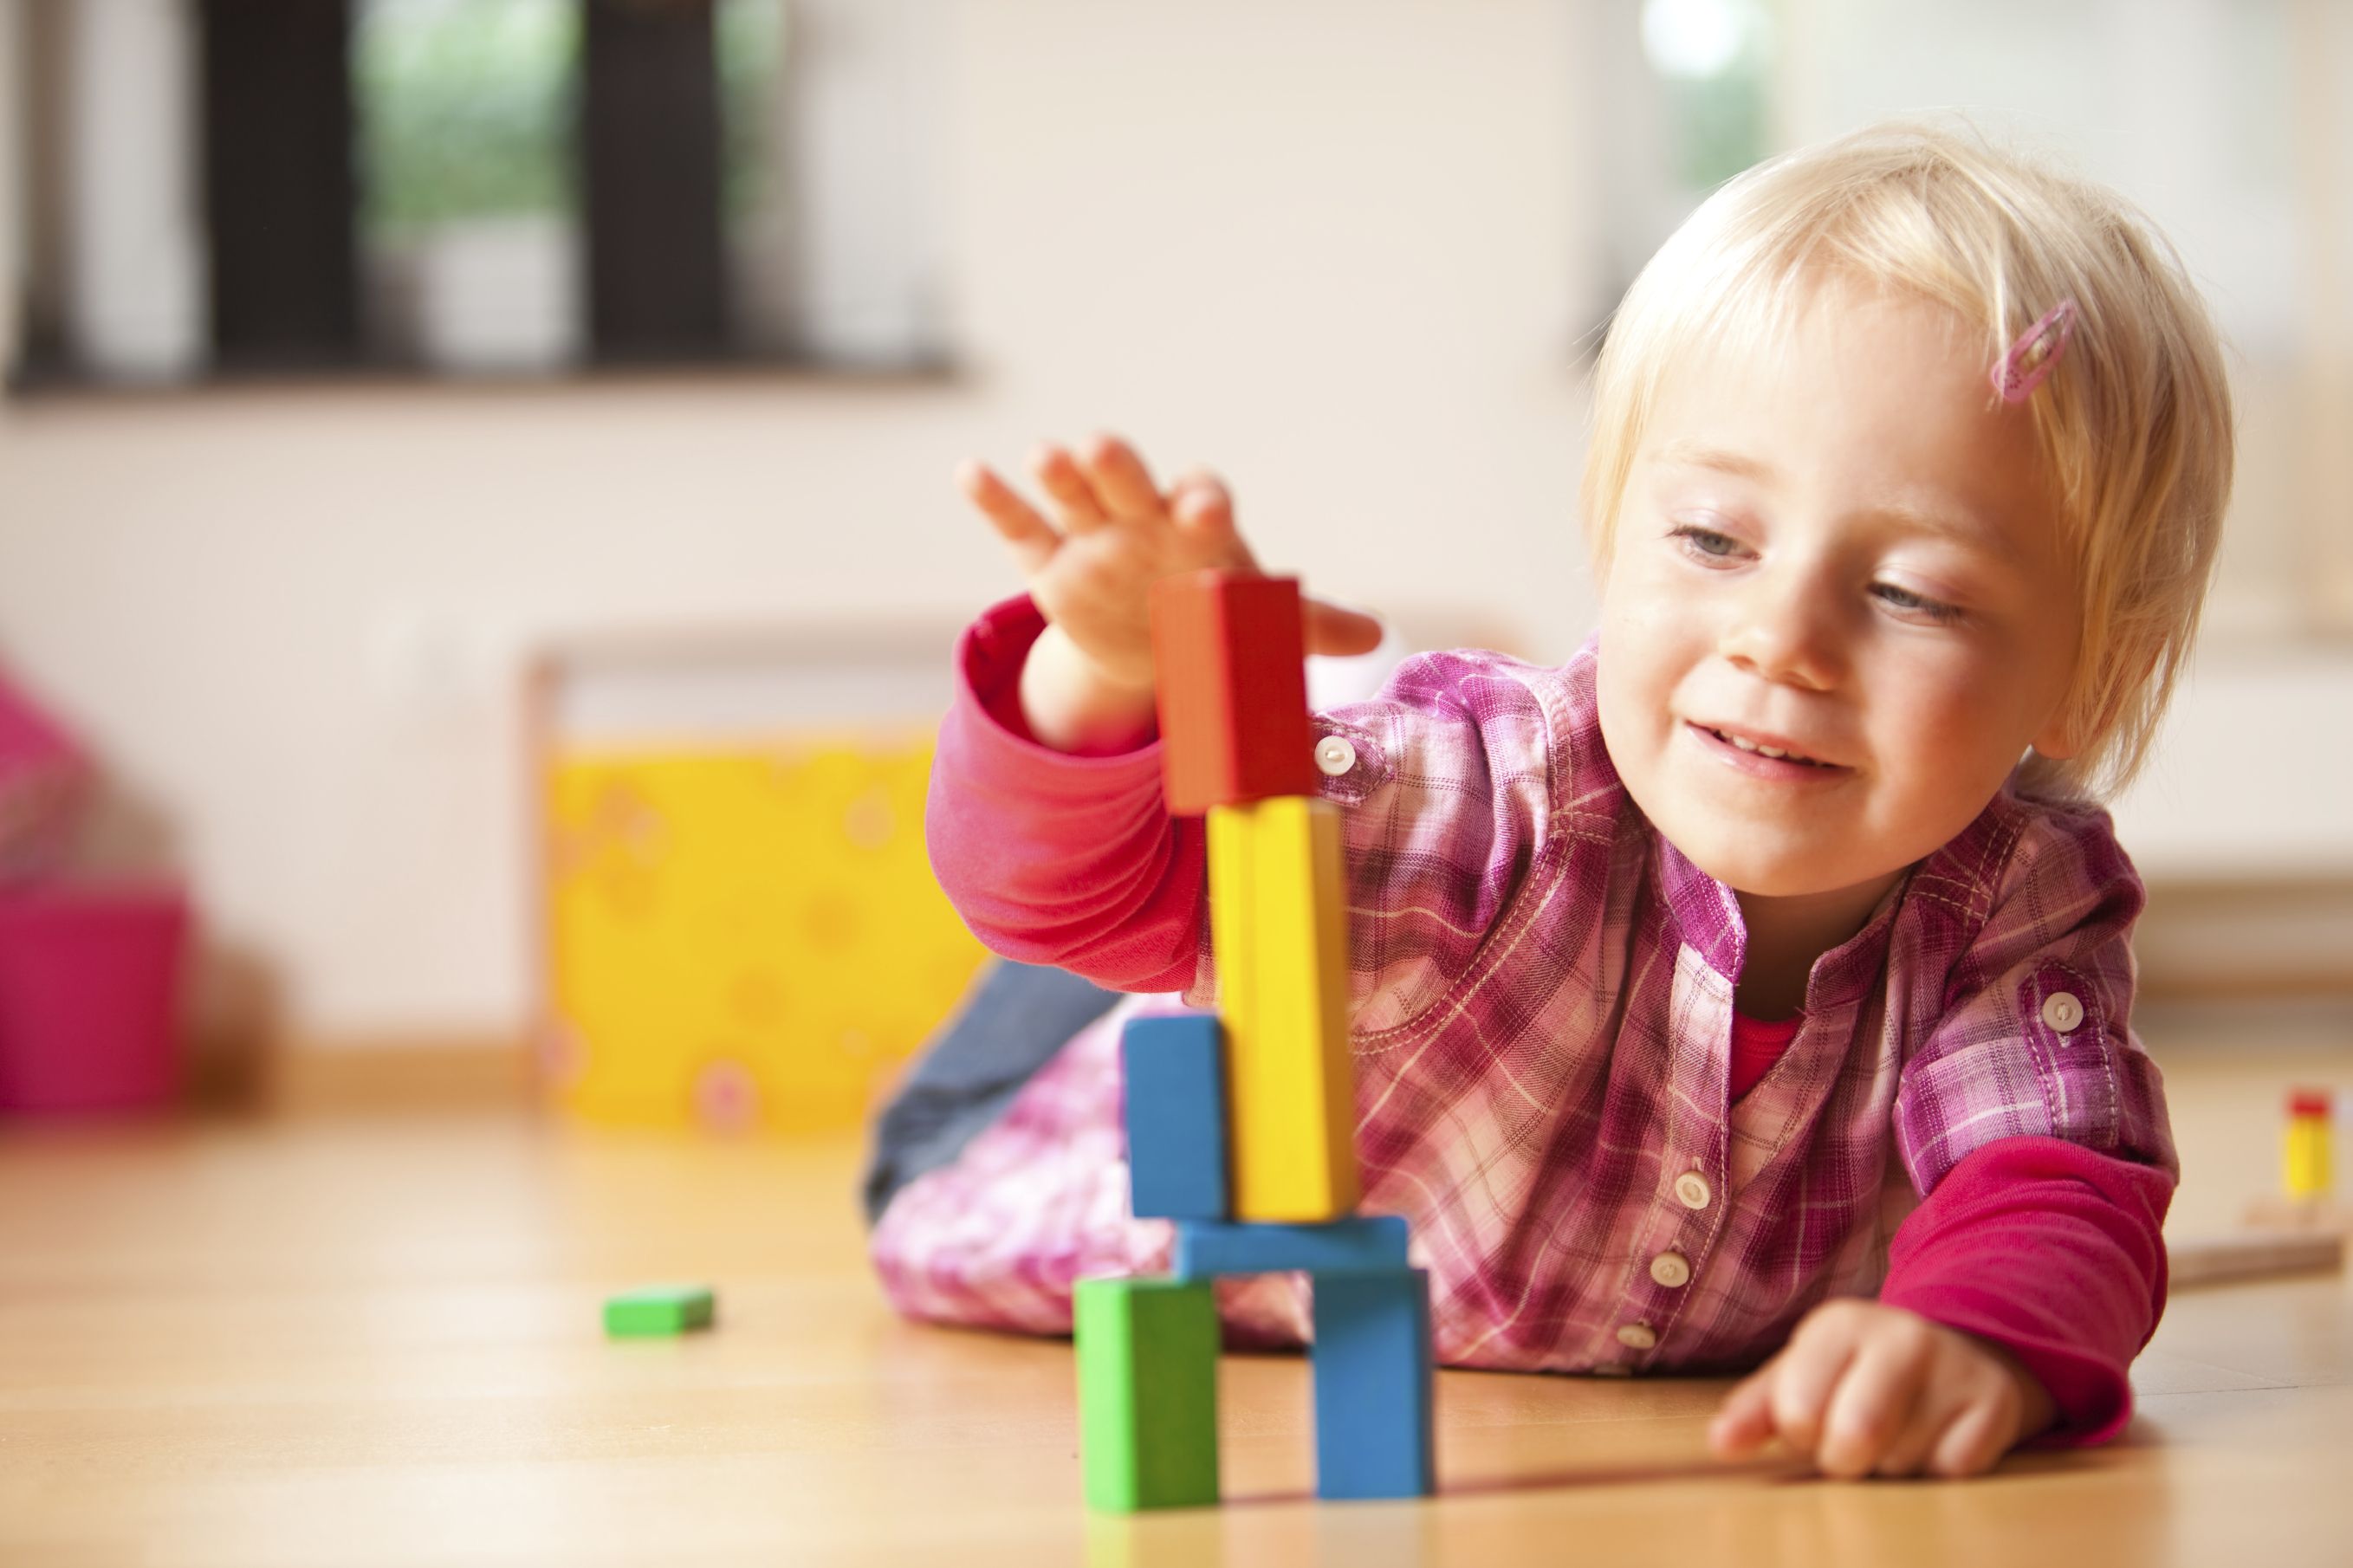 Preschool child building blocks happily